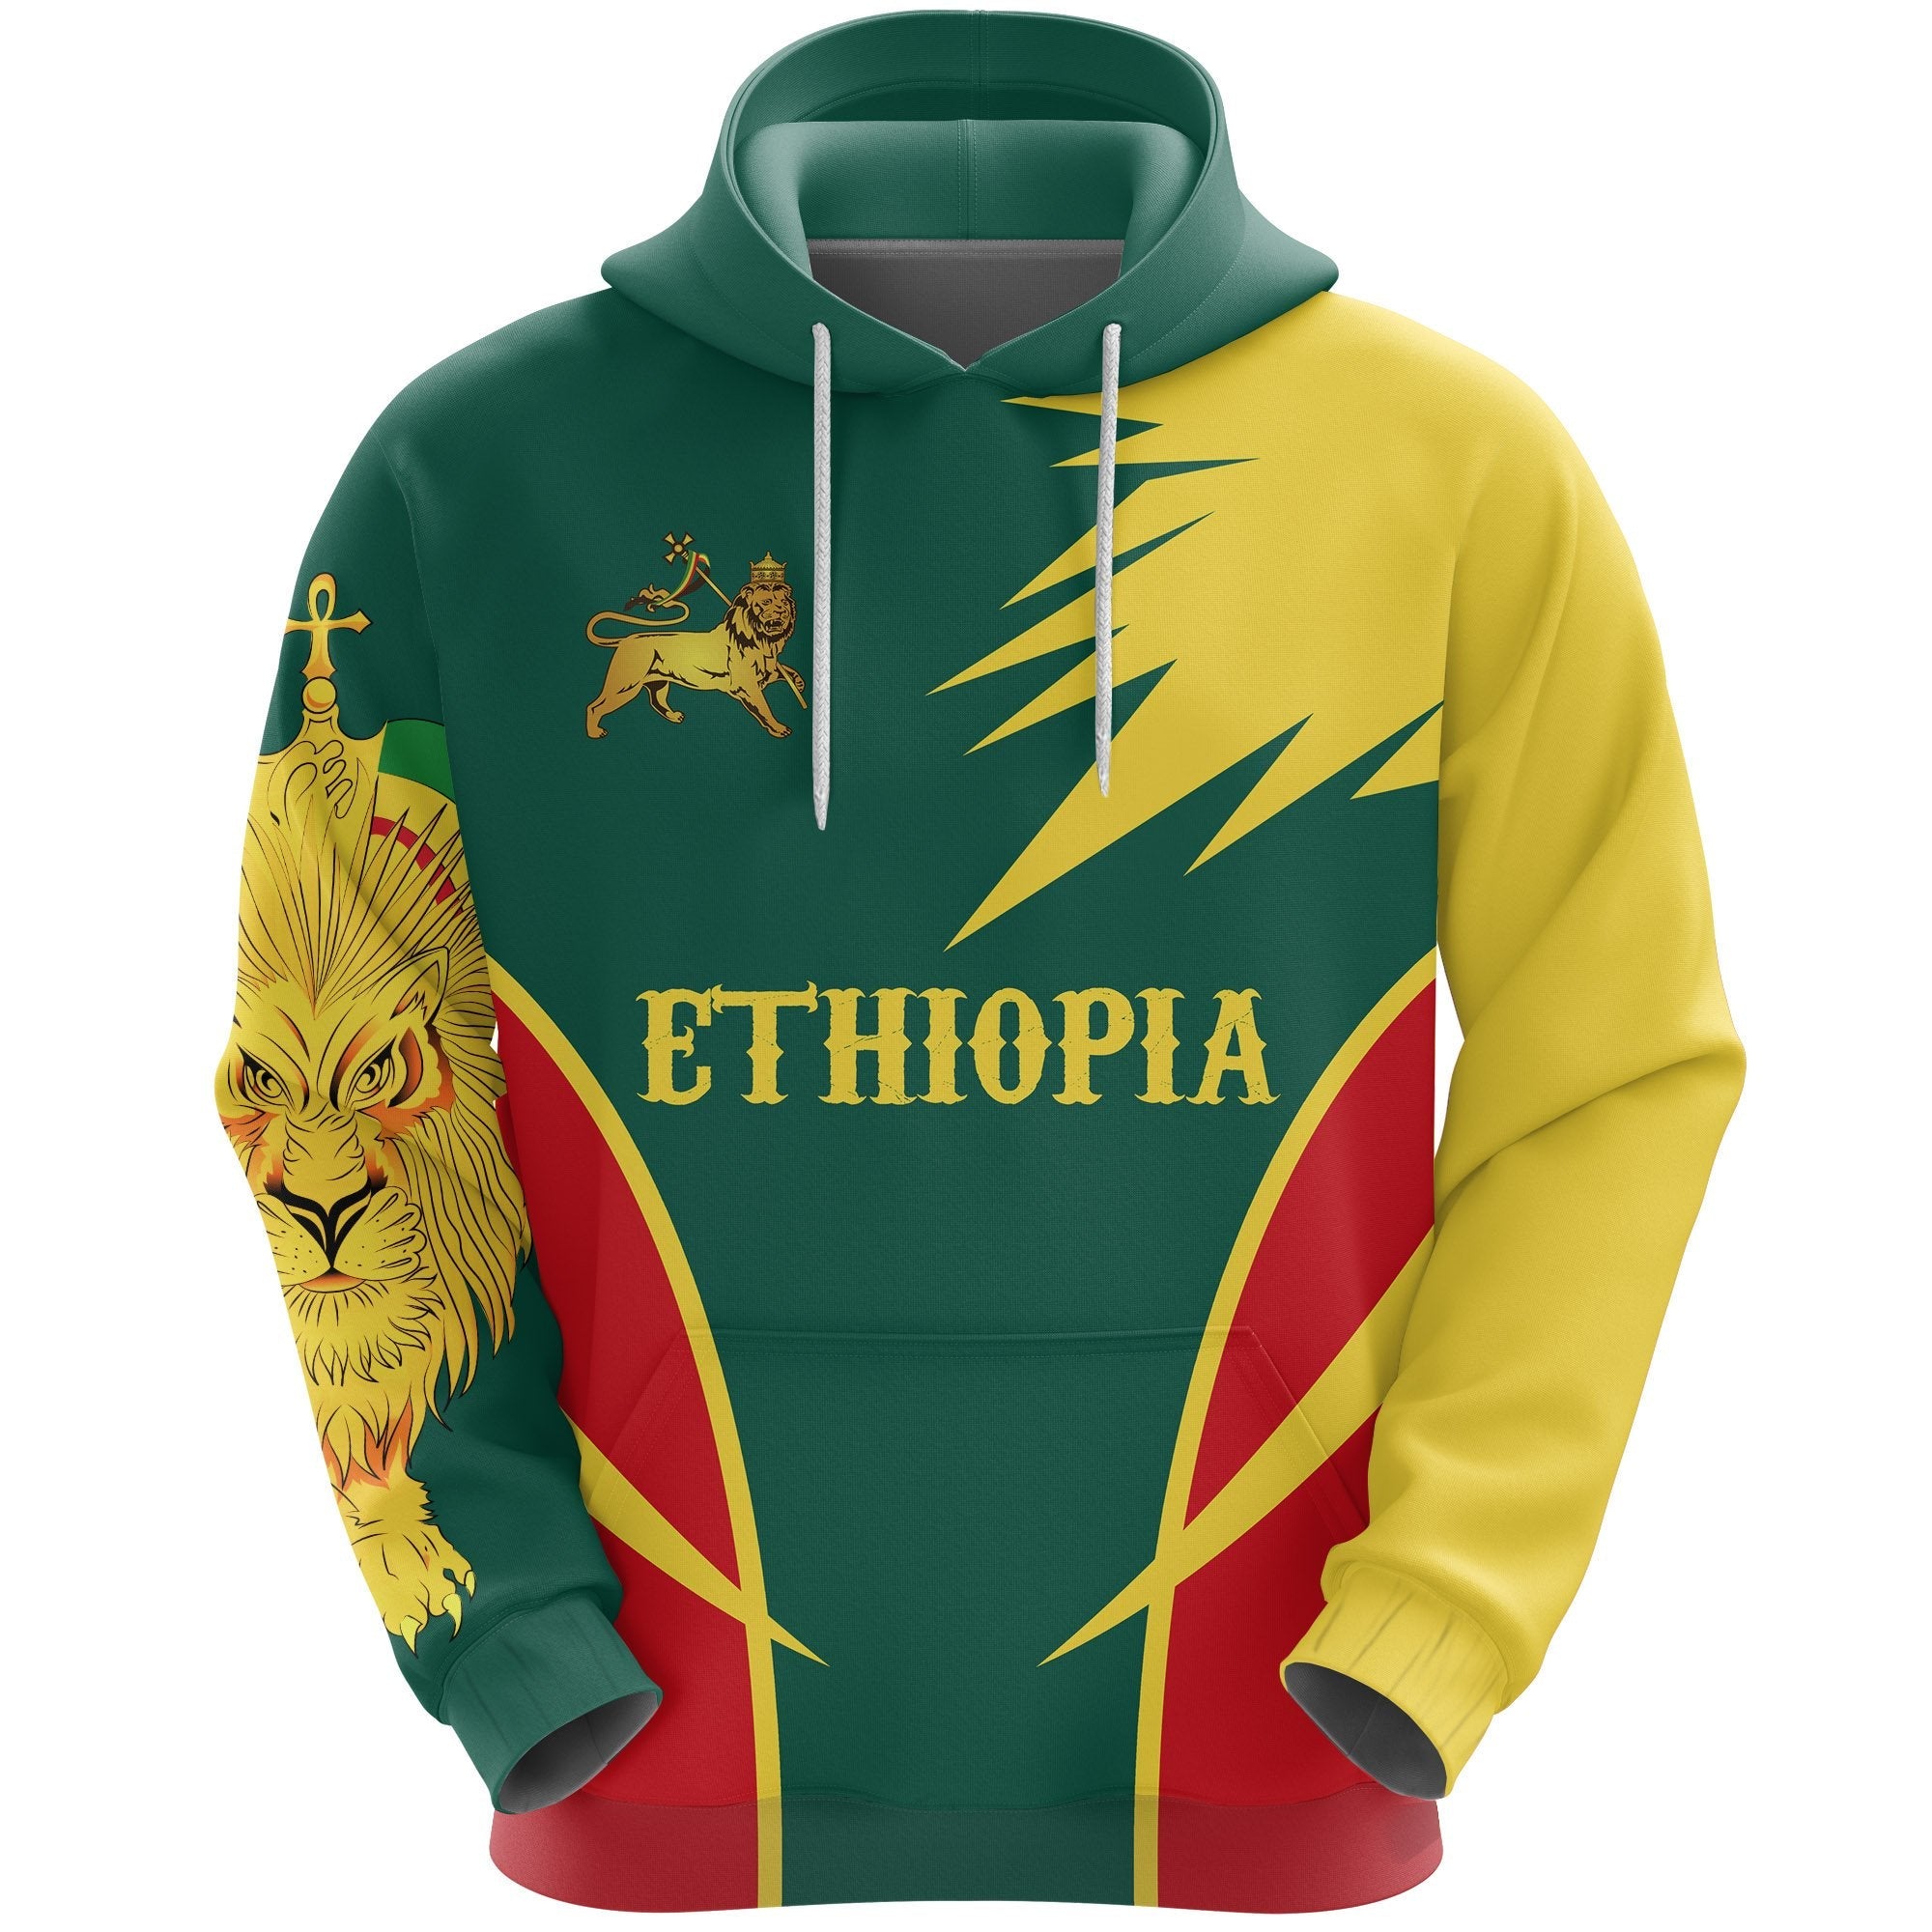 ethiopia-hoodie-the-rasta-lion-tattoo